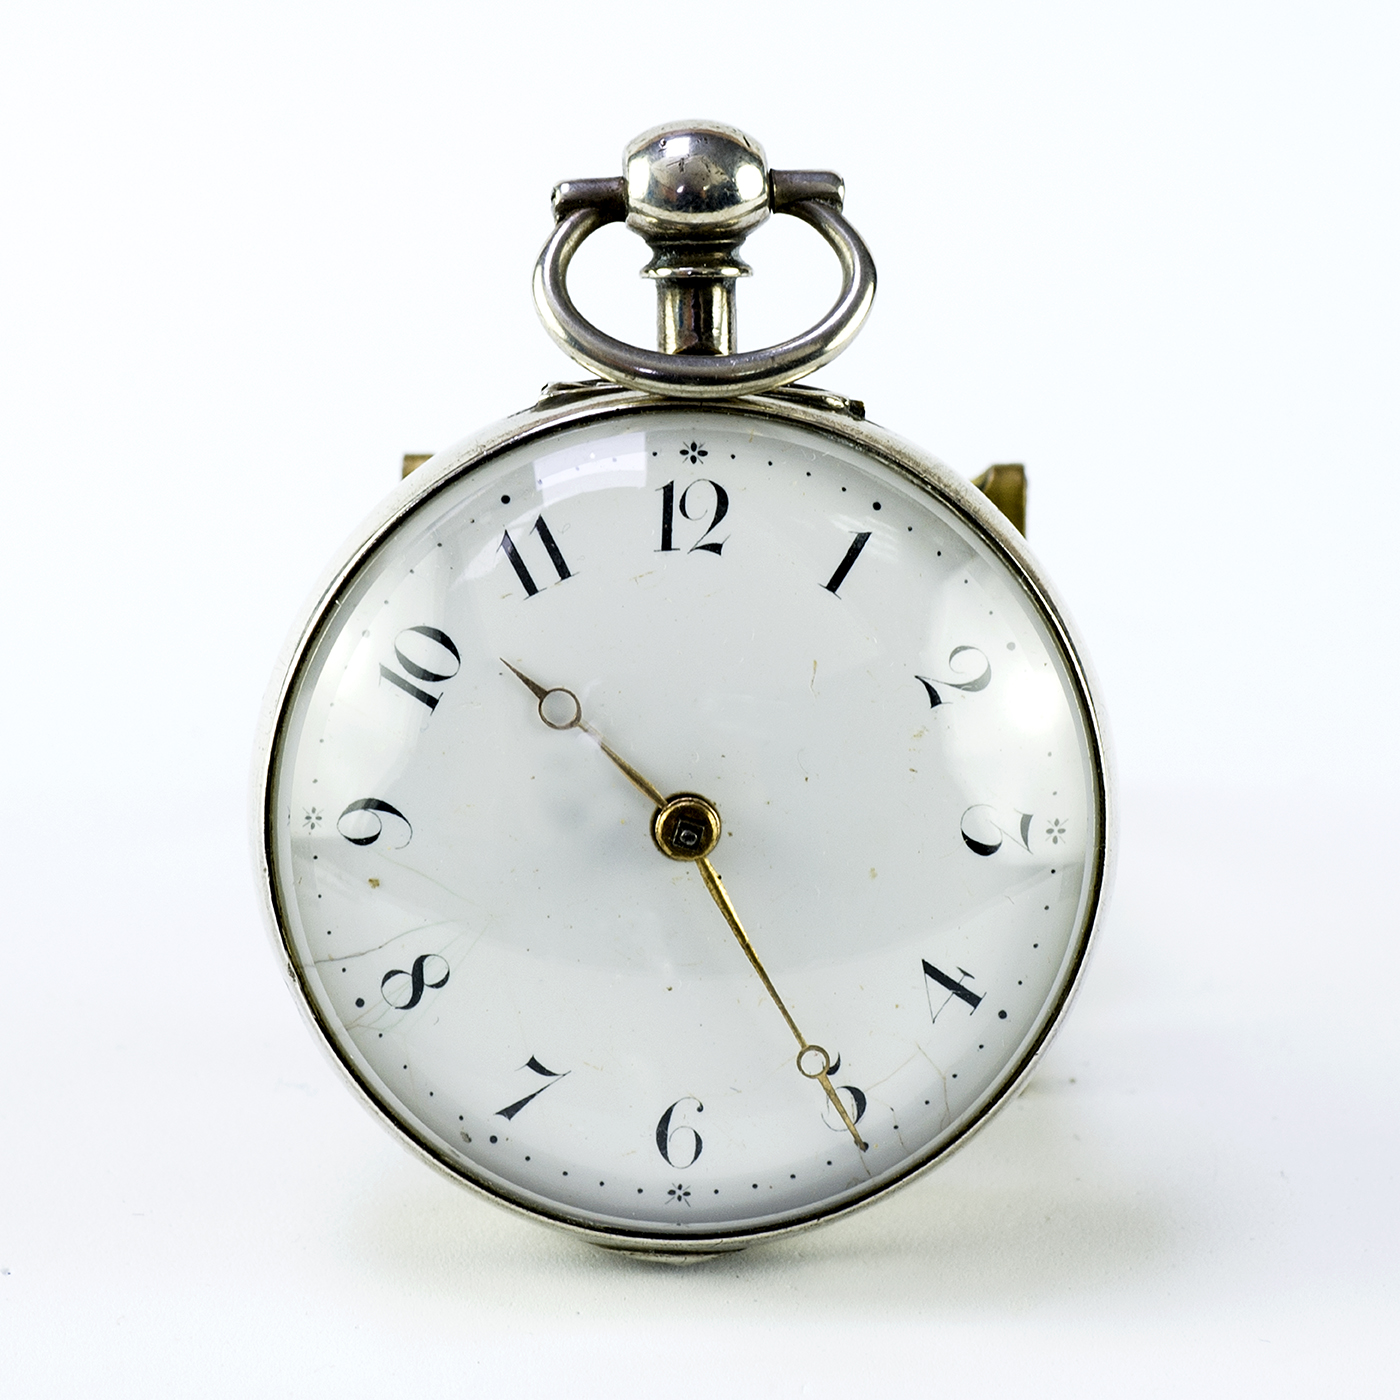 WILL MOLINEUX (Blackheafk). Reloj Francés de Bolsillo, lepine, Verge Fusse. Londres, 1820.